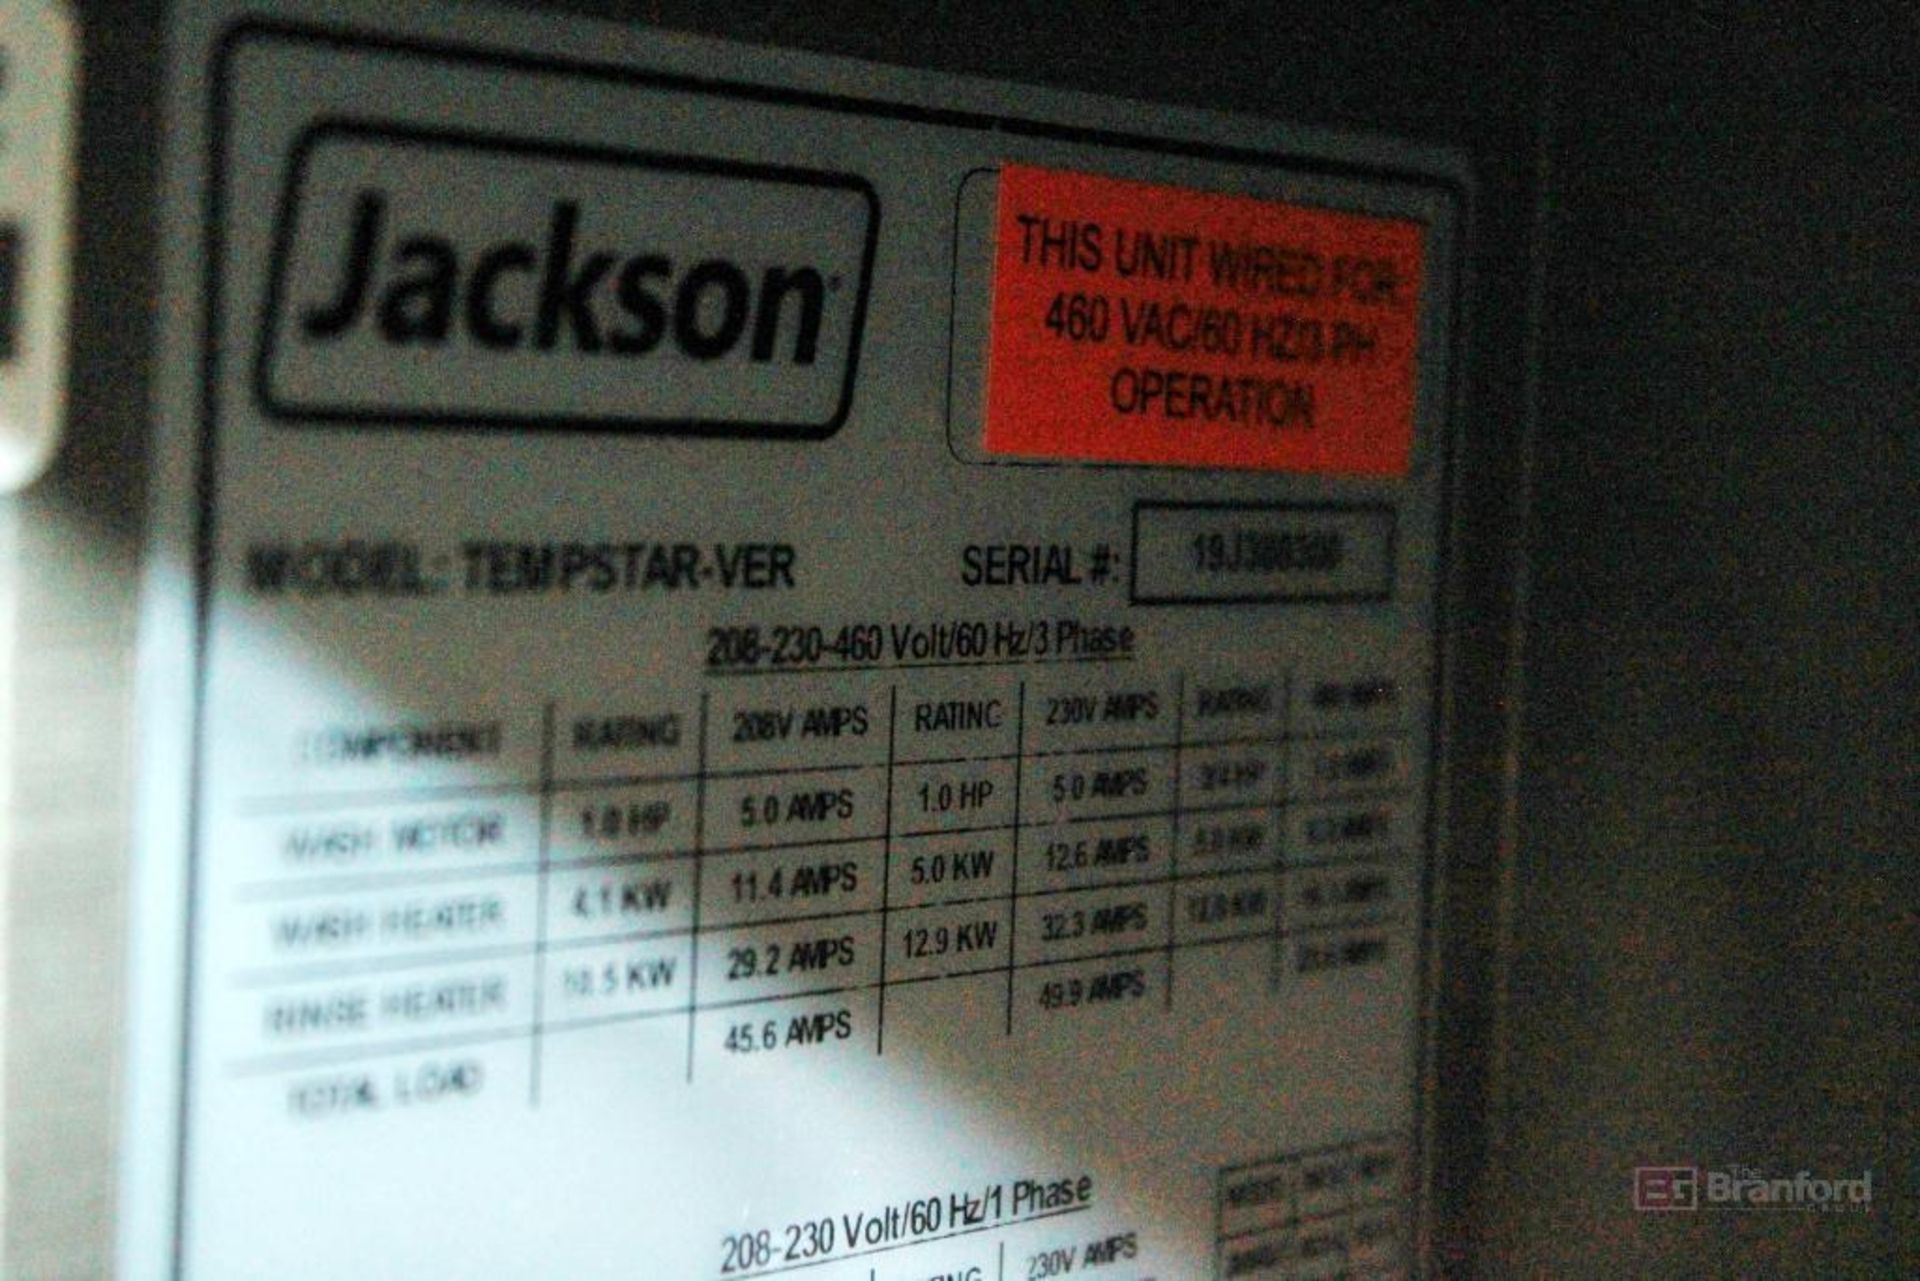 Jackson TEMPSTAR Commercial Dishwasher Model Tempstar-VER - Image 6 of 10